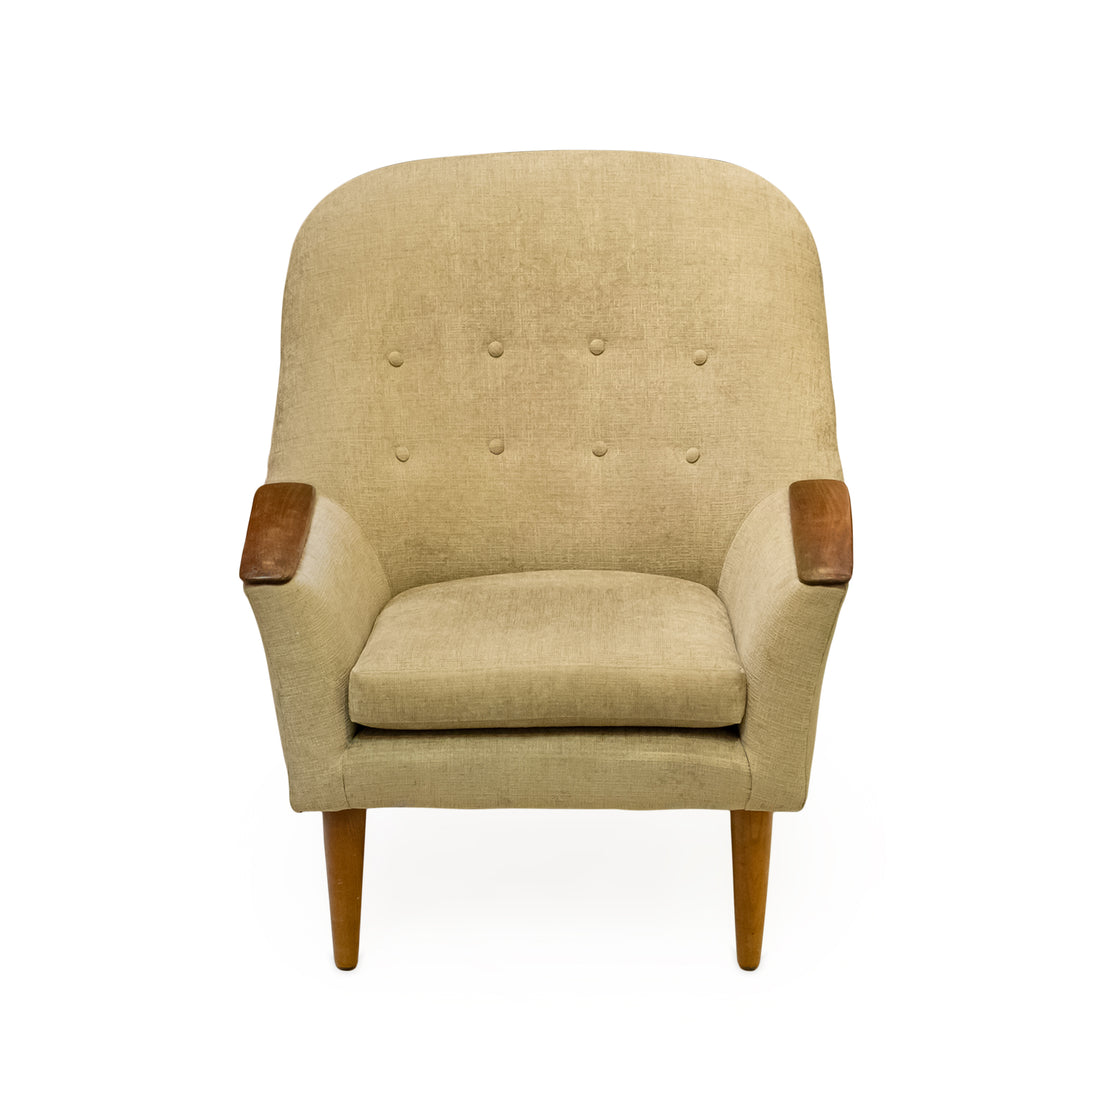 Vintage Teak Armchair with Beige Upholstery